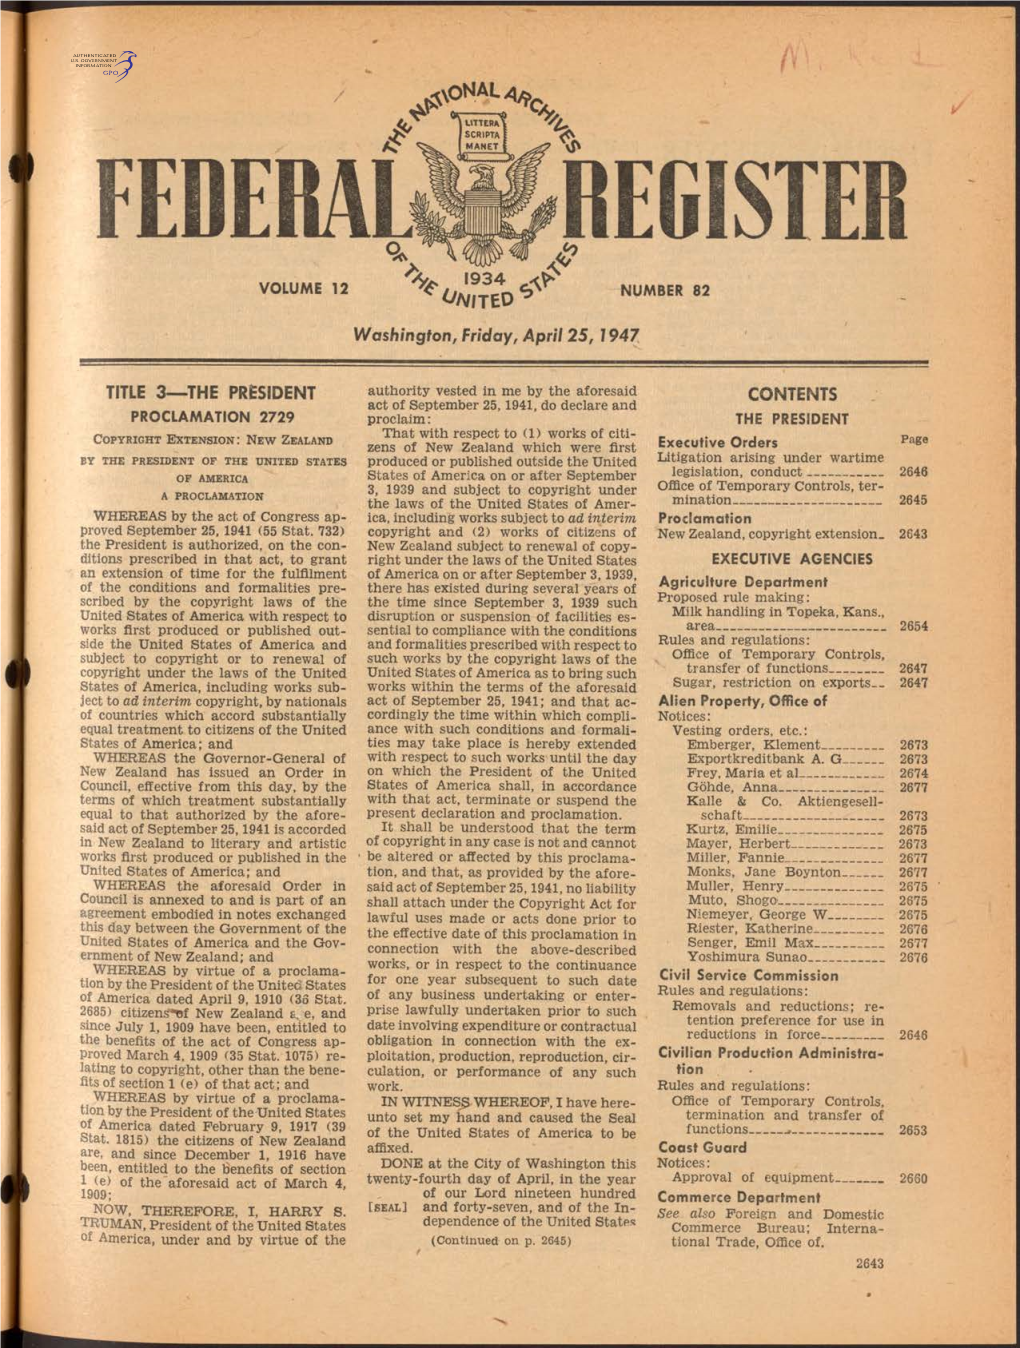 TITLE 3—THE PRESIDENT Washington, Friday, April 25,1947